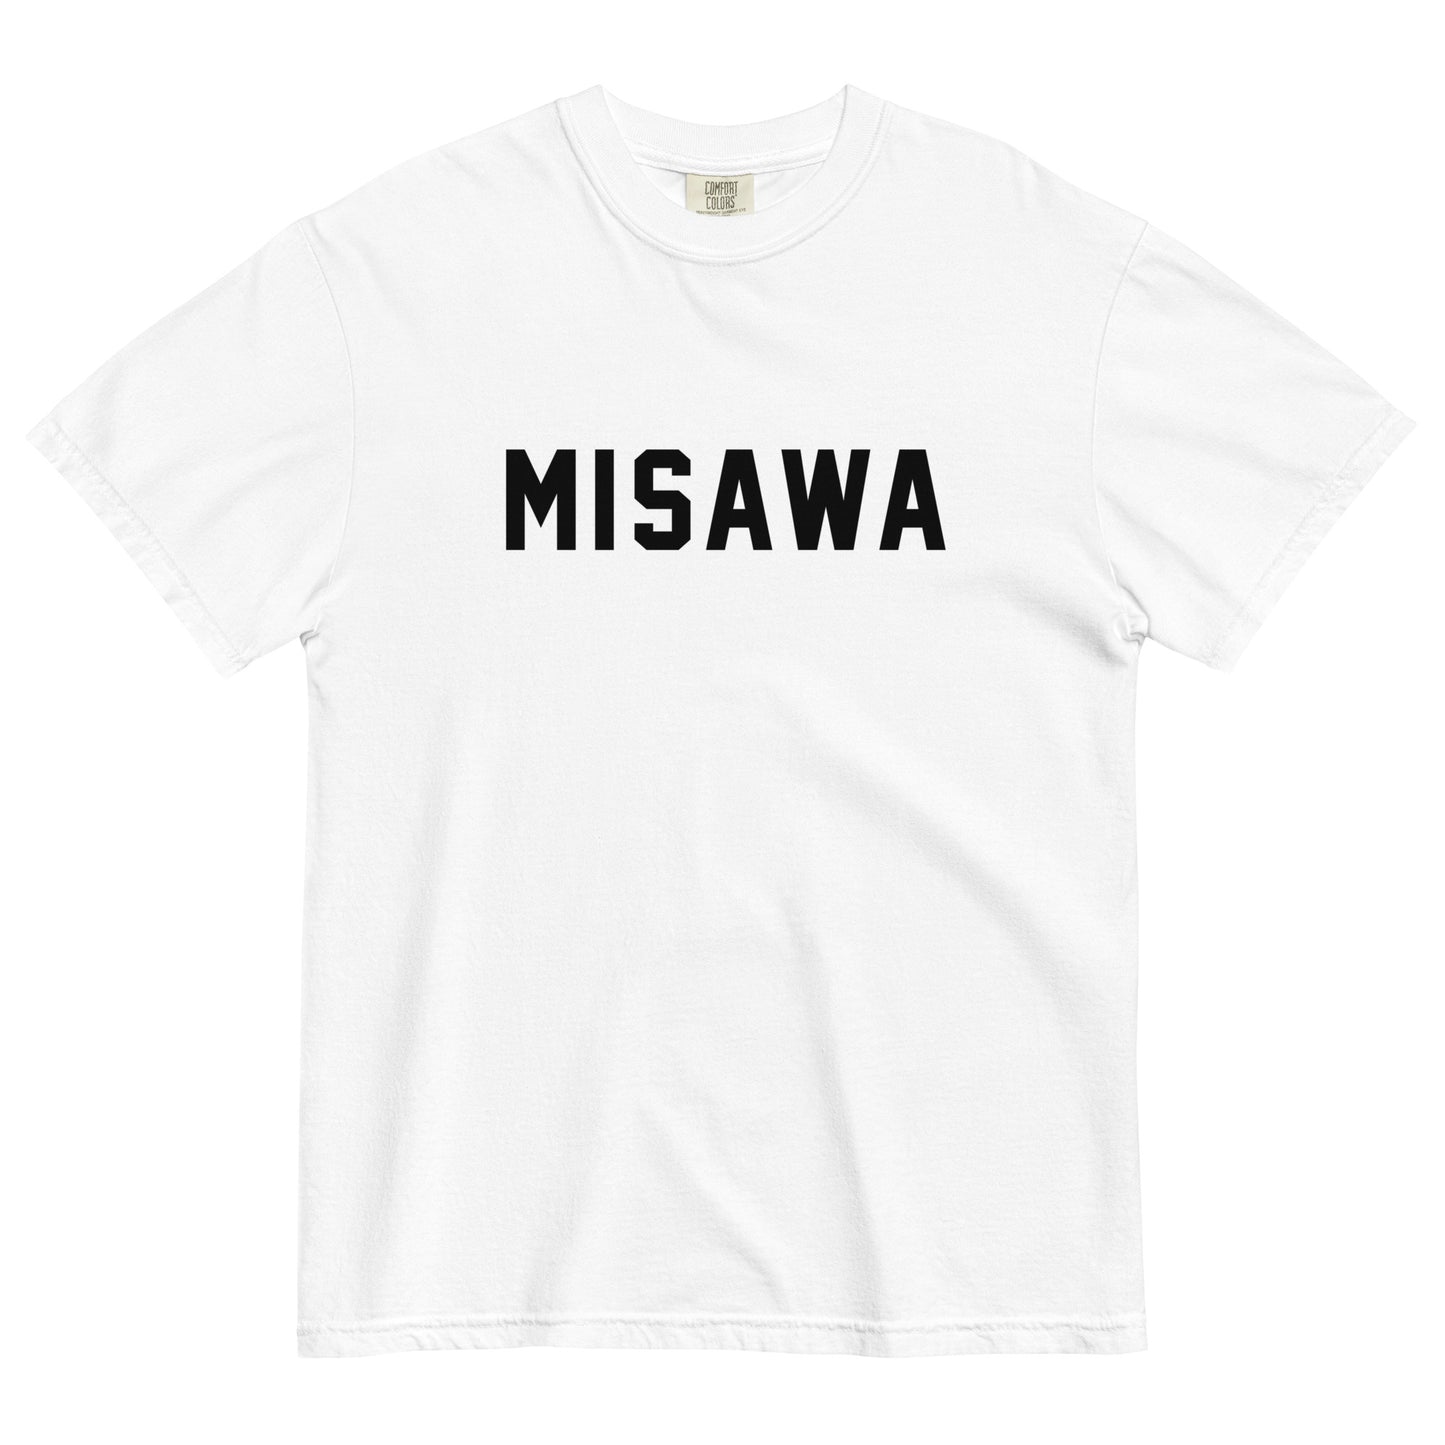 MITSUHARU MISAWA